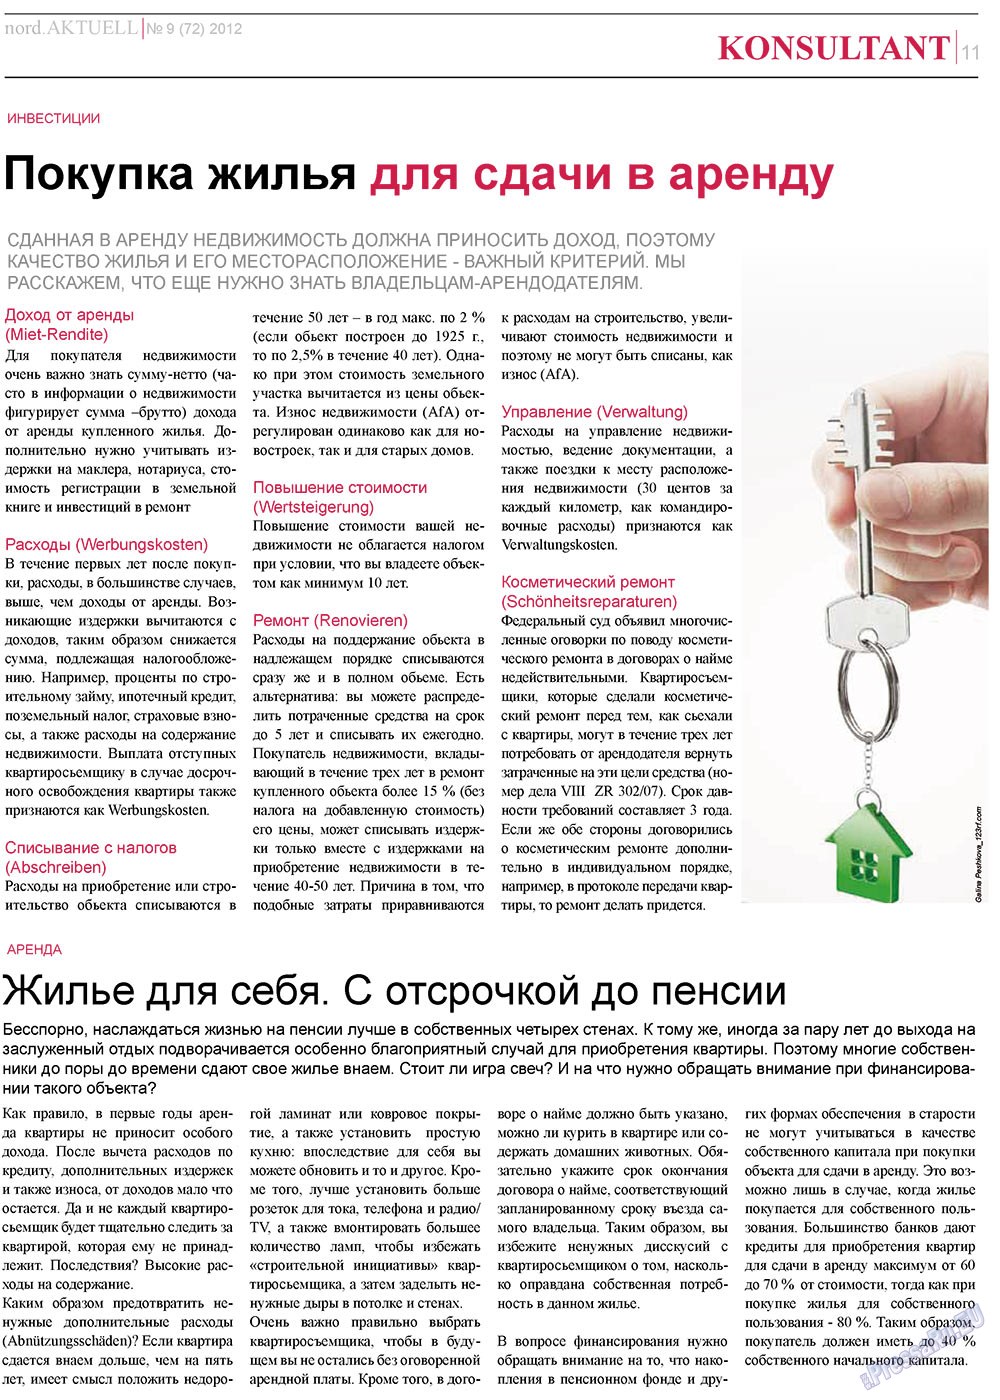 nord.Aktuell, газета. 2012 №9 стр.11